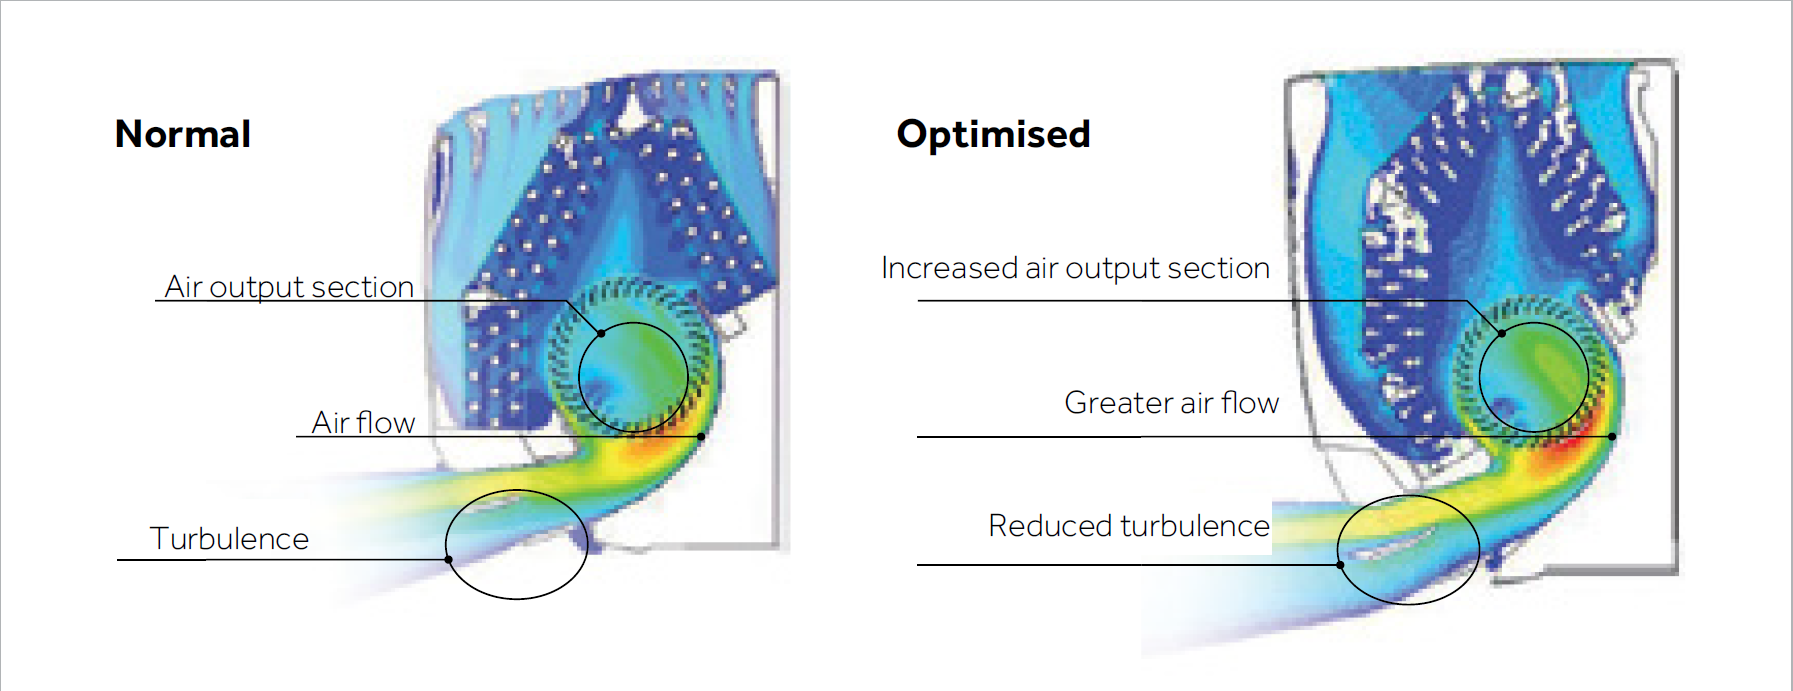 Optimised design of air ducts